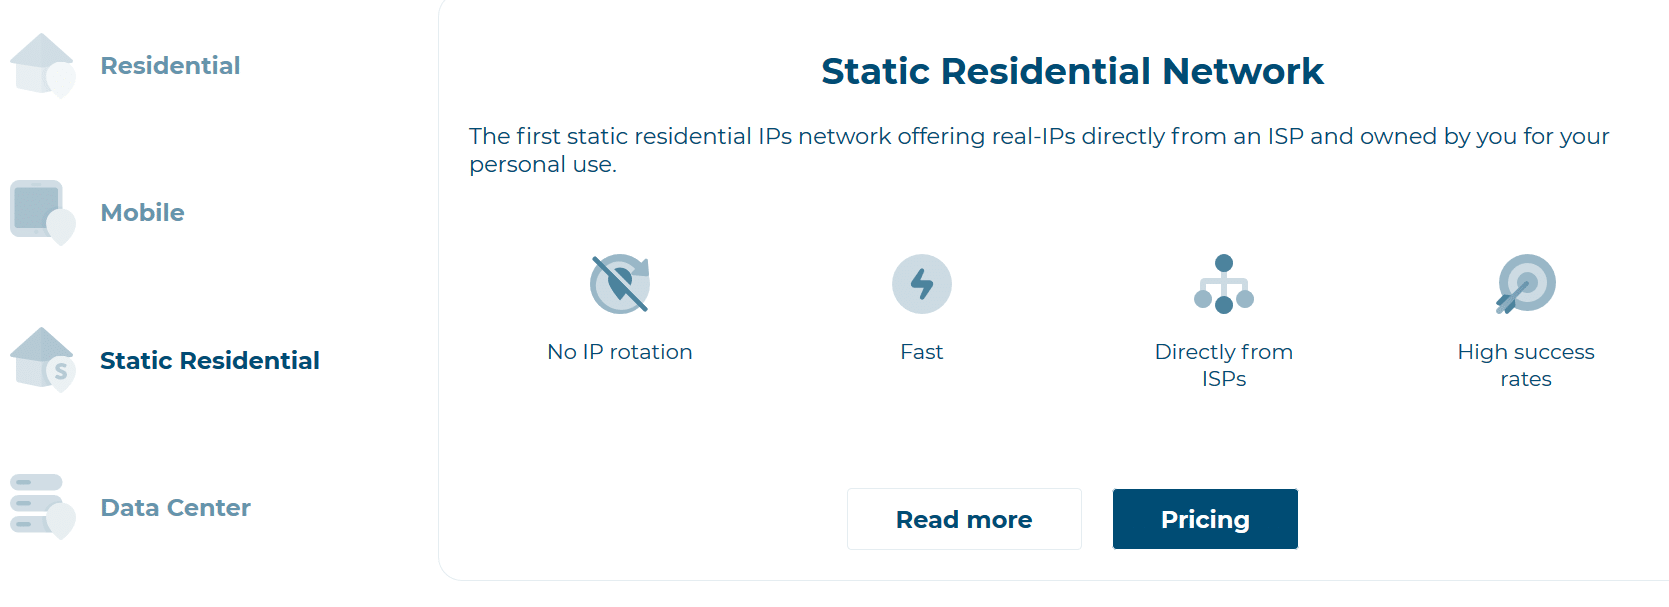 Static Residential Network